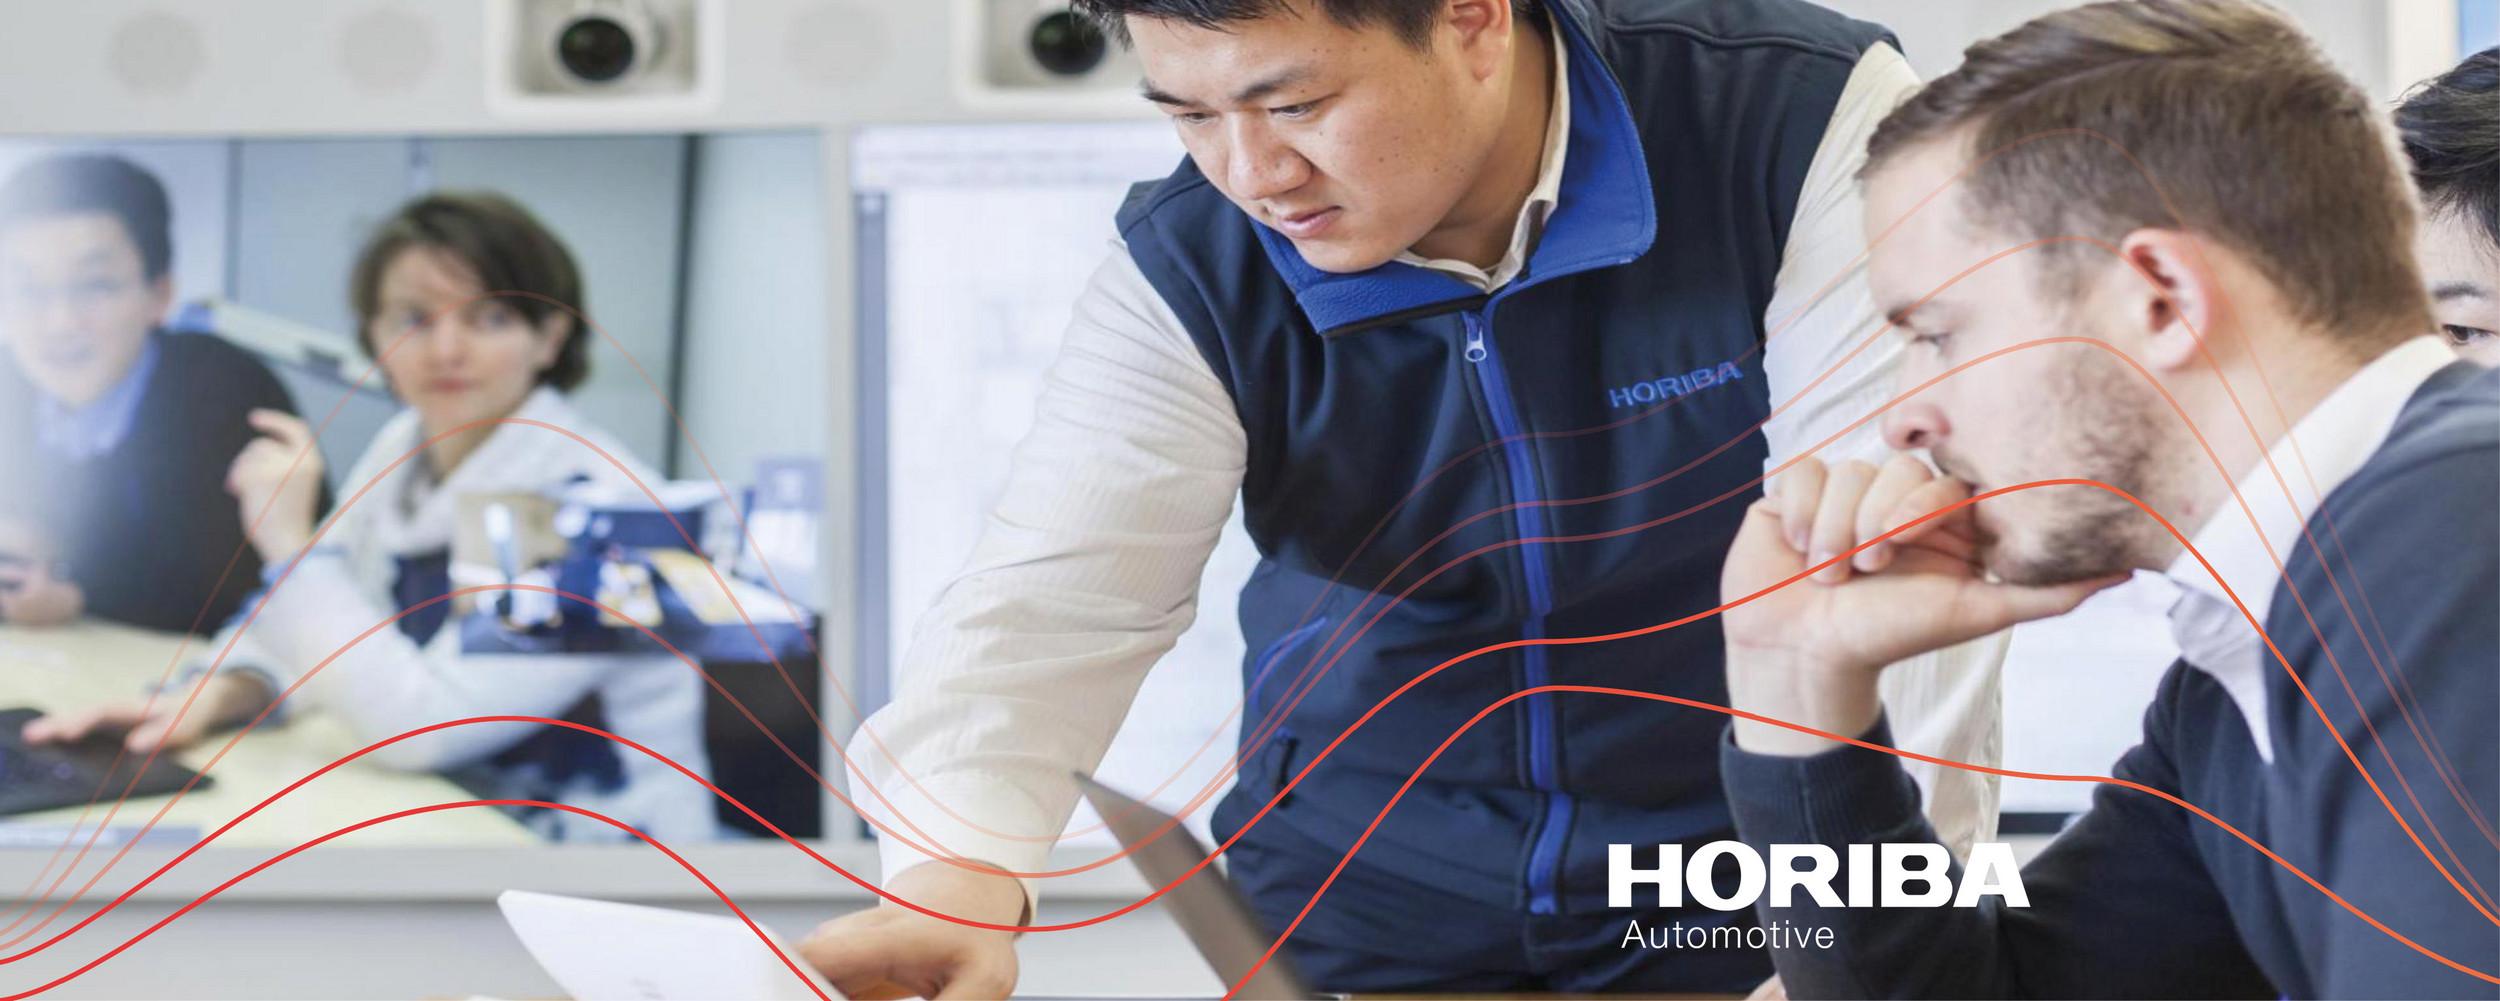 HORIBA Automotive provides customized training programs